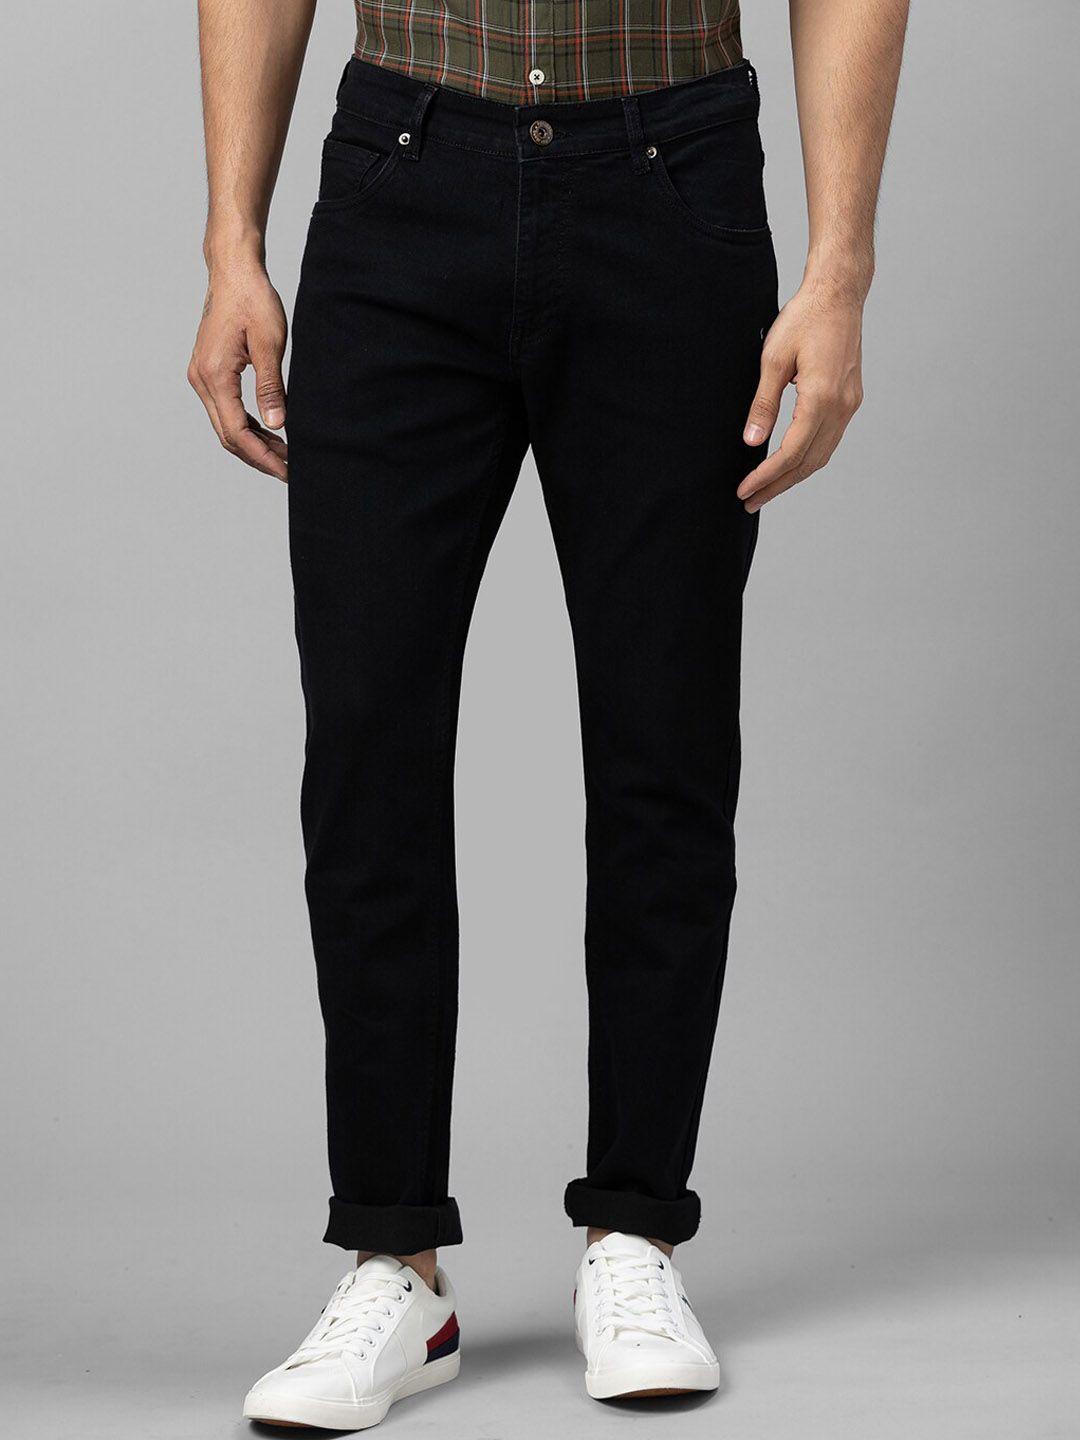 globus men black tapered fit stretchable cotton jeans